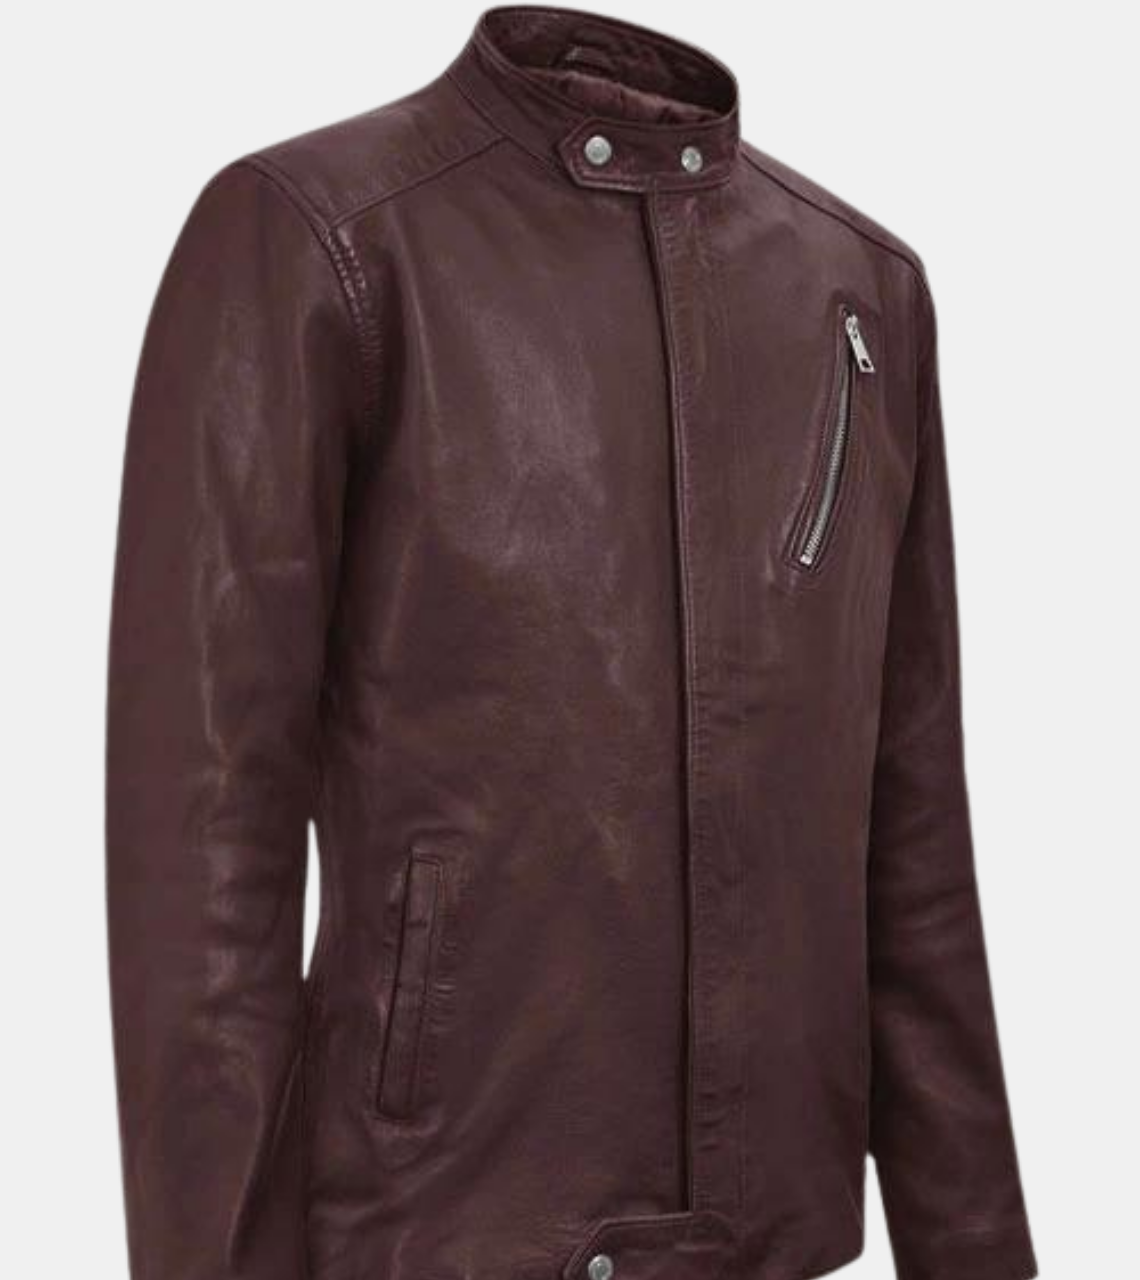 Rosewood Biker's Leather Jacket